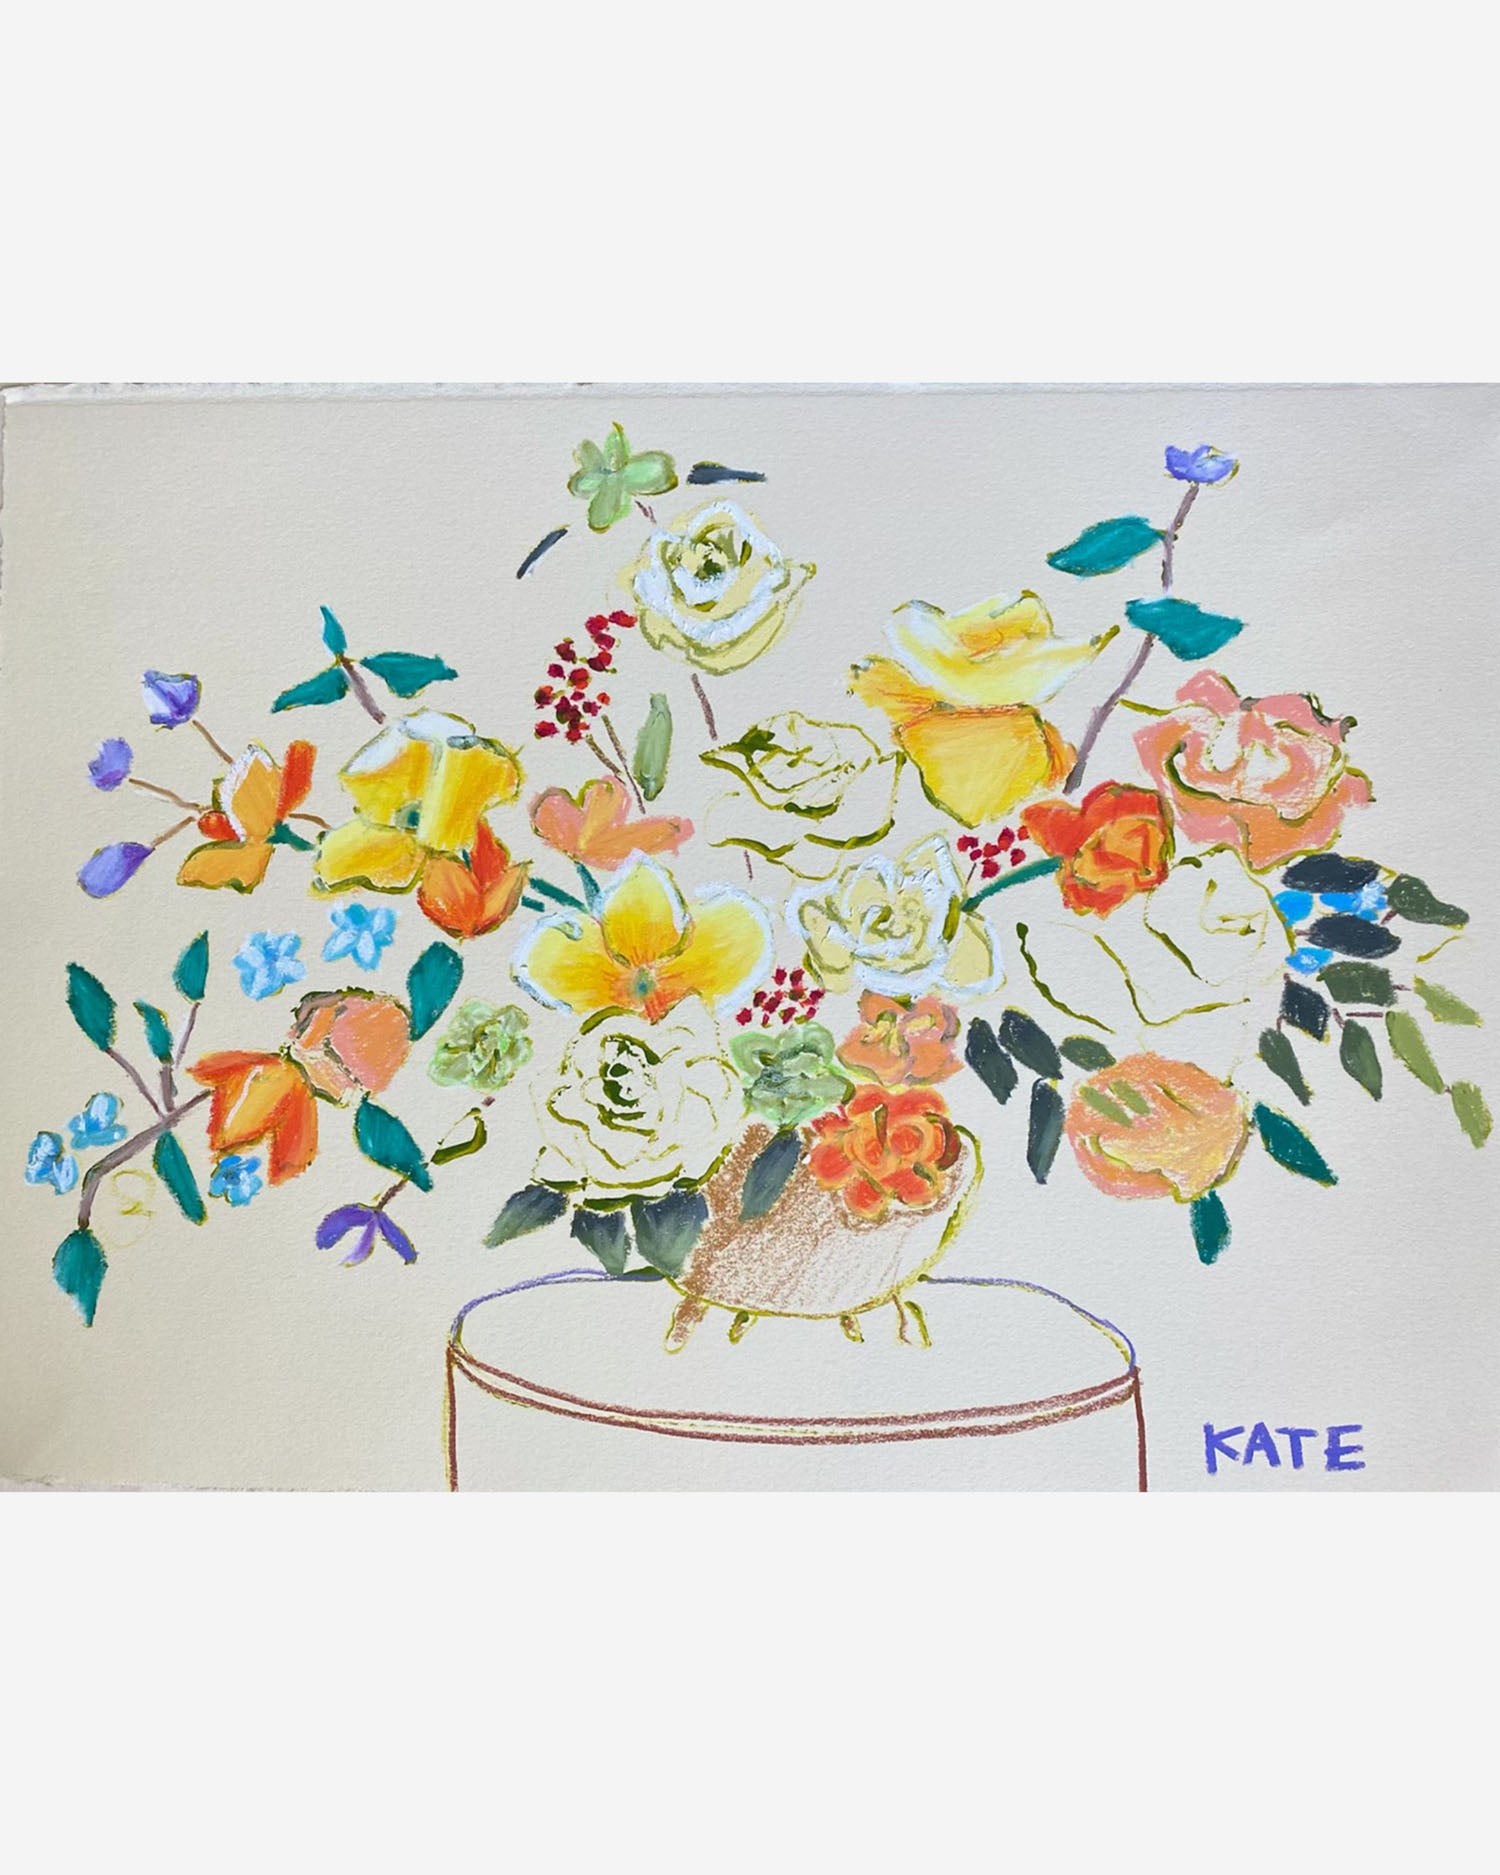 Kate Rawal original 11 x 15 artwork with mixed media